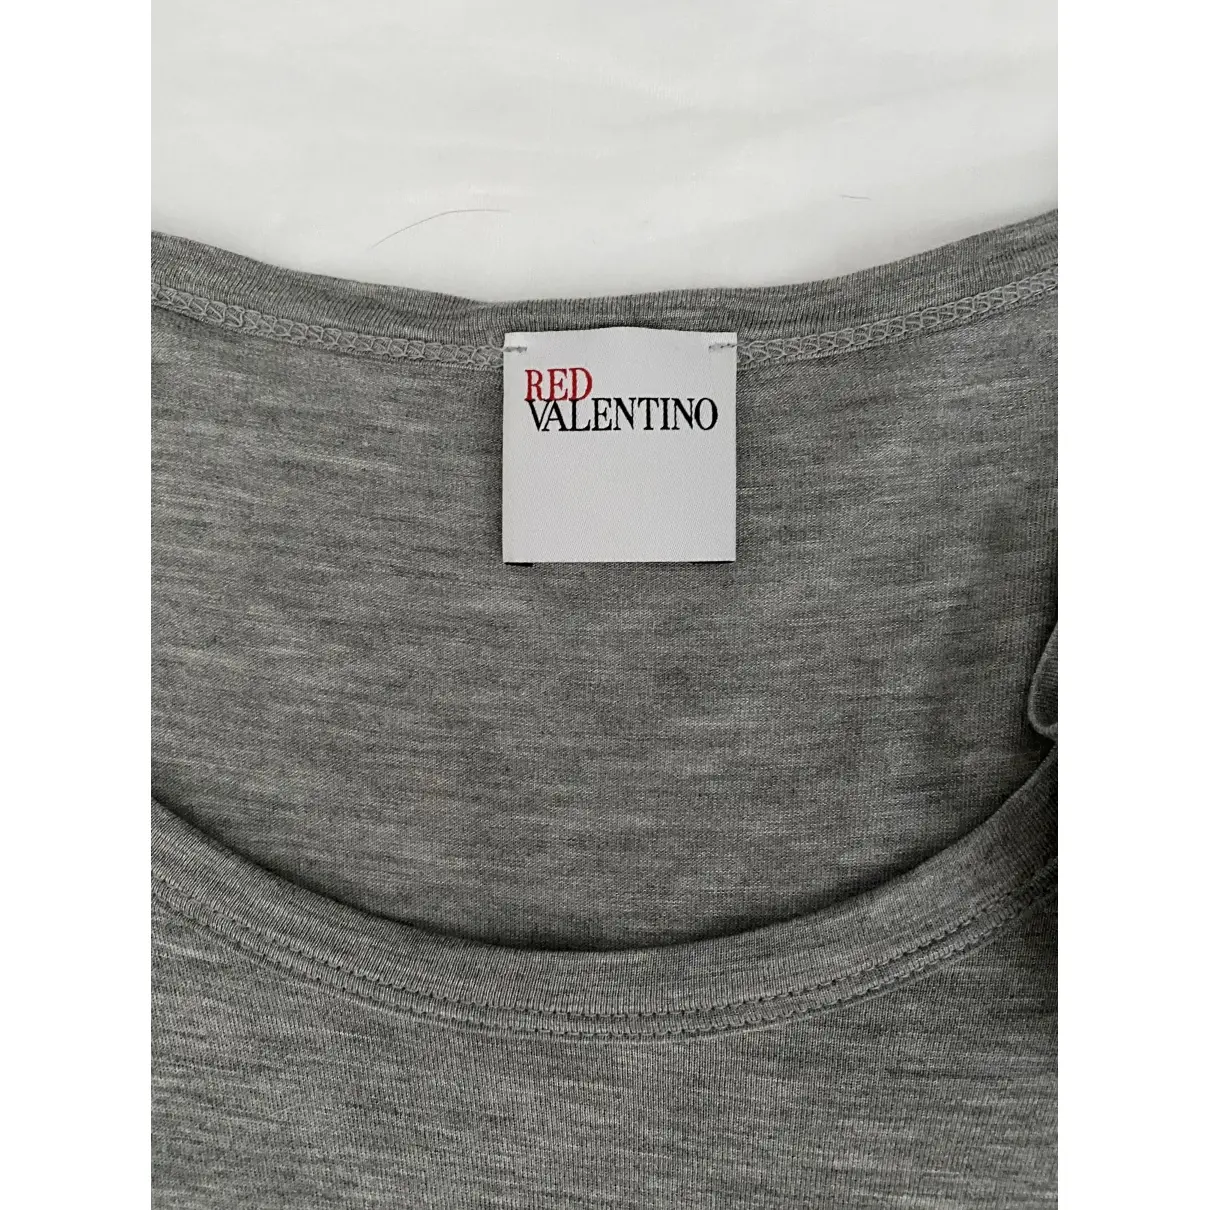 Buy Red Valentino Garavani Grey Synthetic Top online